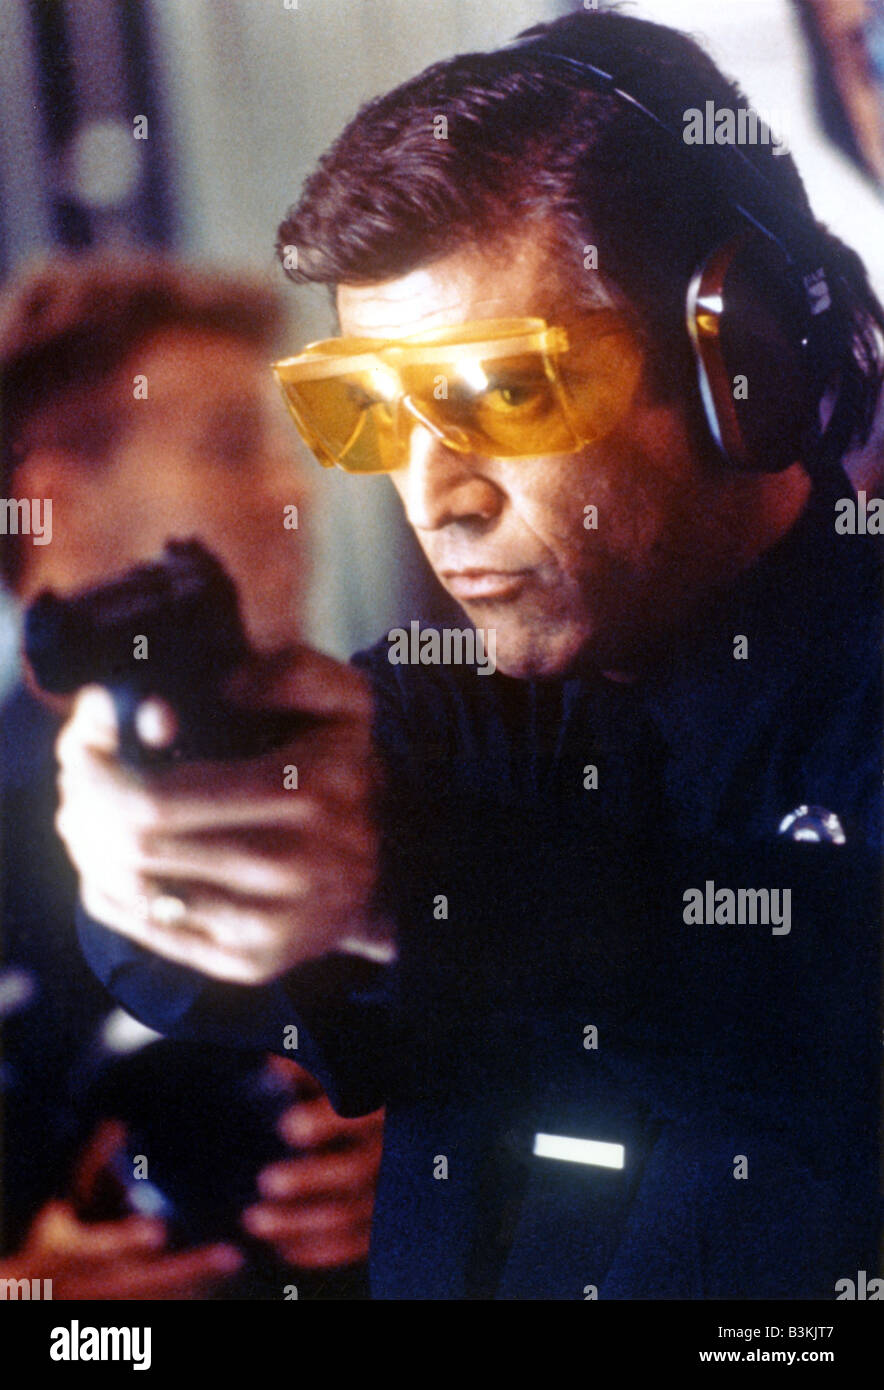 L'ARMA di LEATHAL 3 1992 Warner film con Joe Pesci Foto Stock